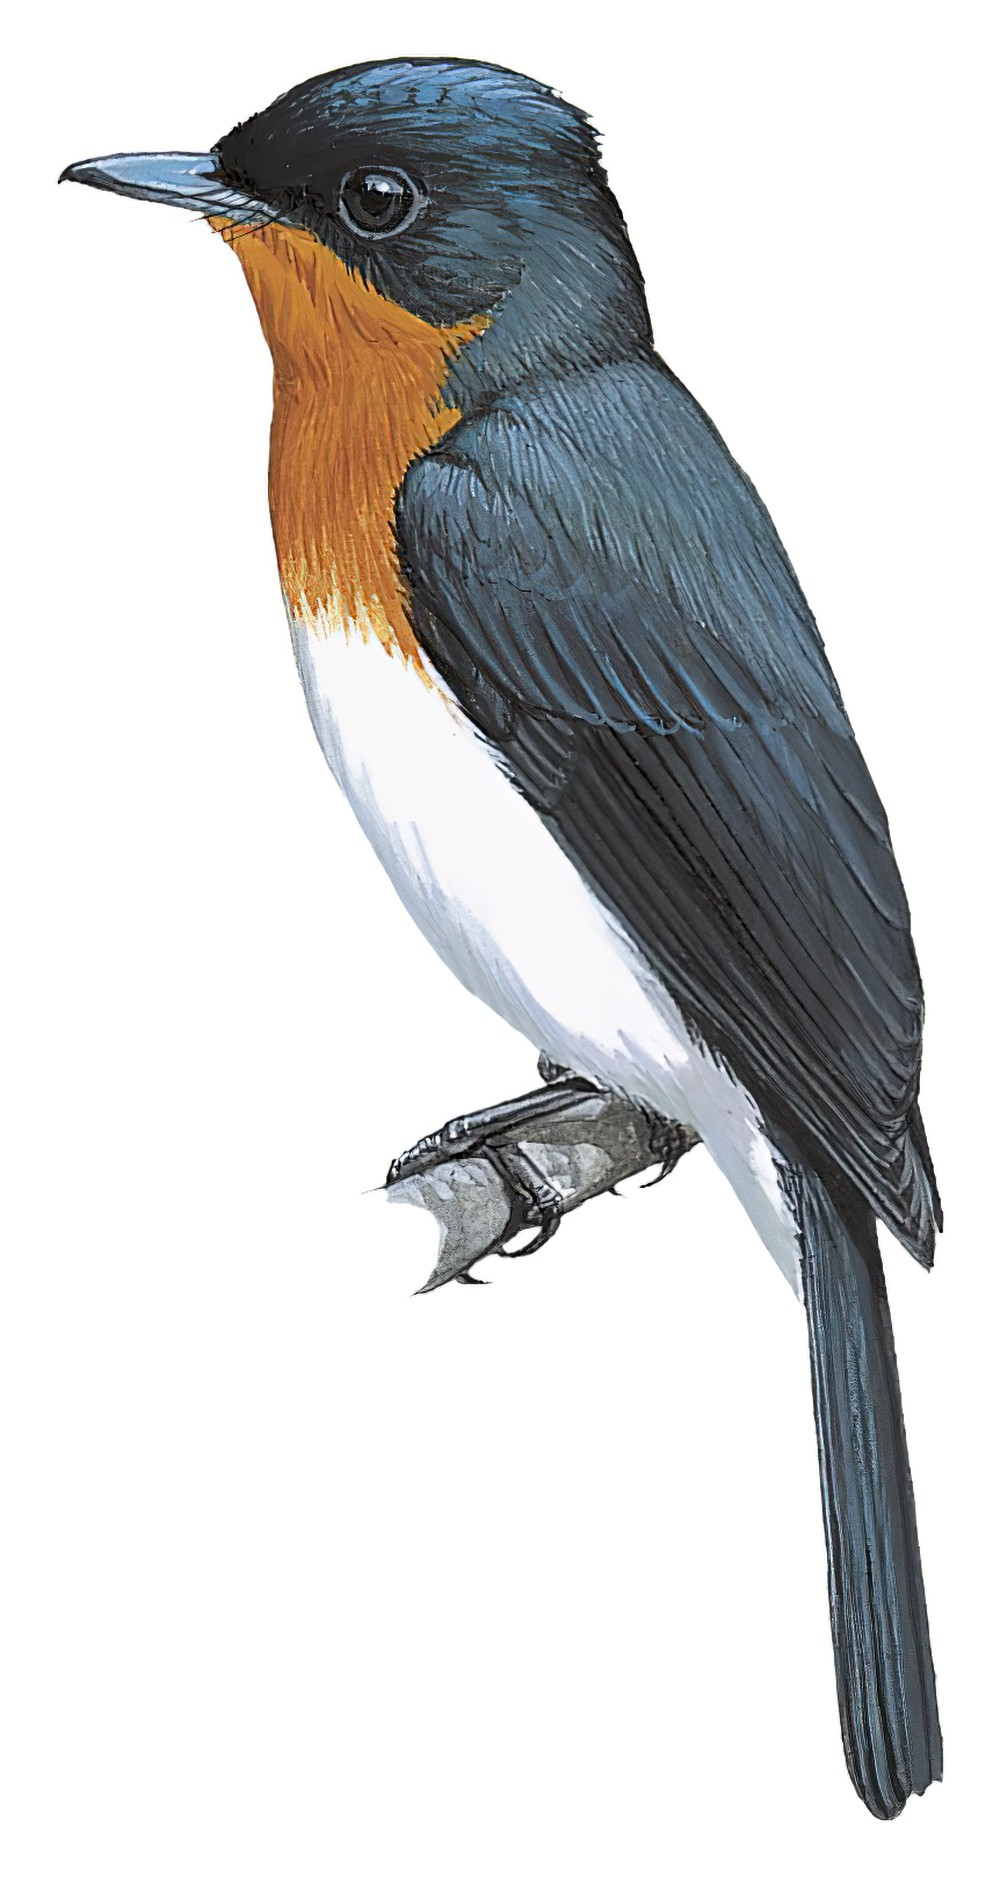 Samoan Flycatcher / Myiagra albiventris